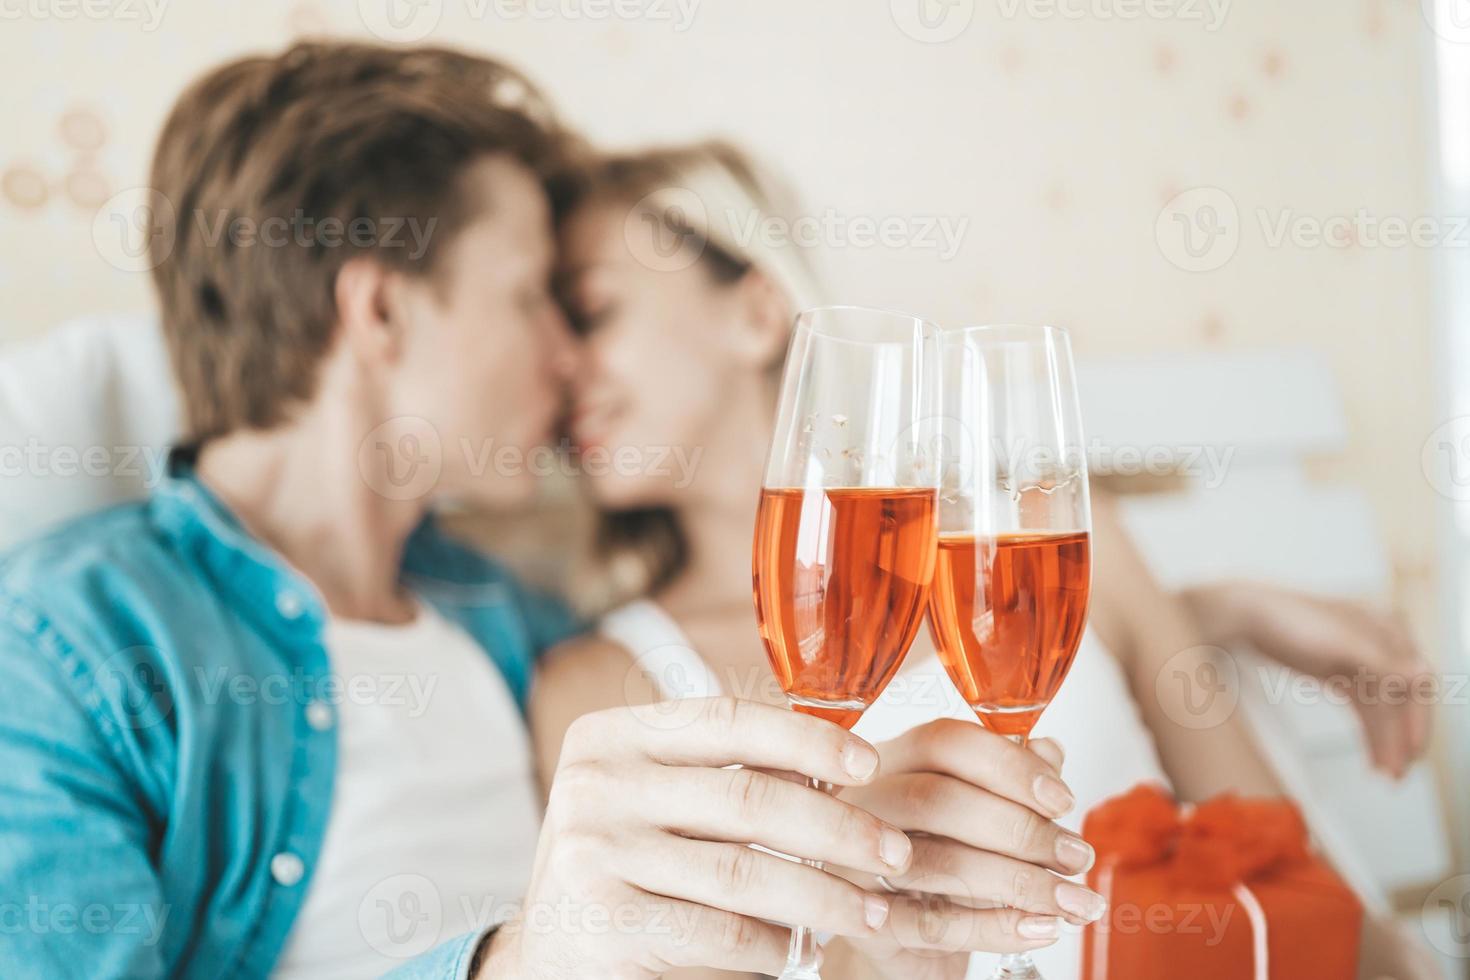 casal feliz bebendo vinho no quarto foto